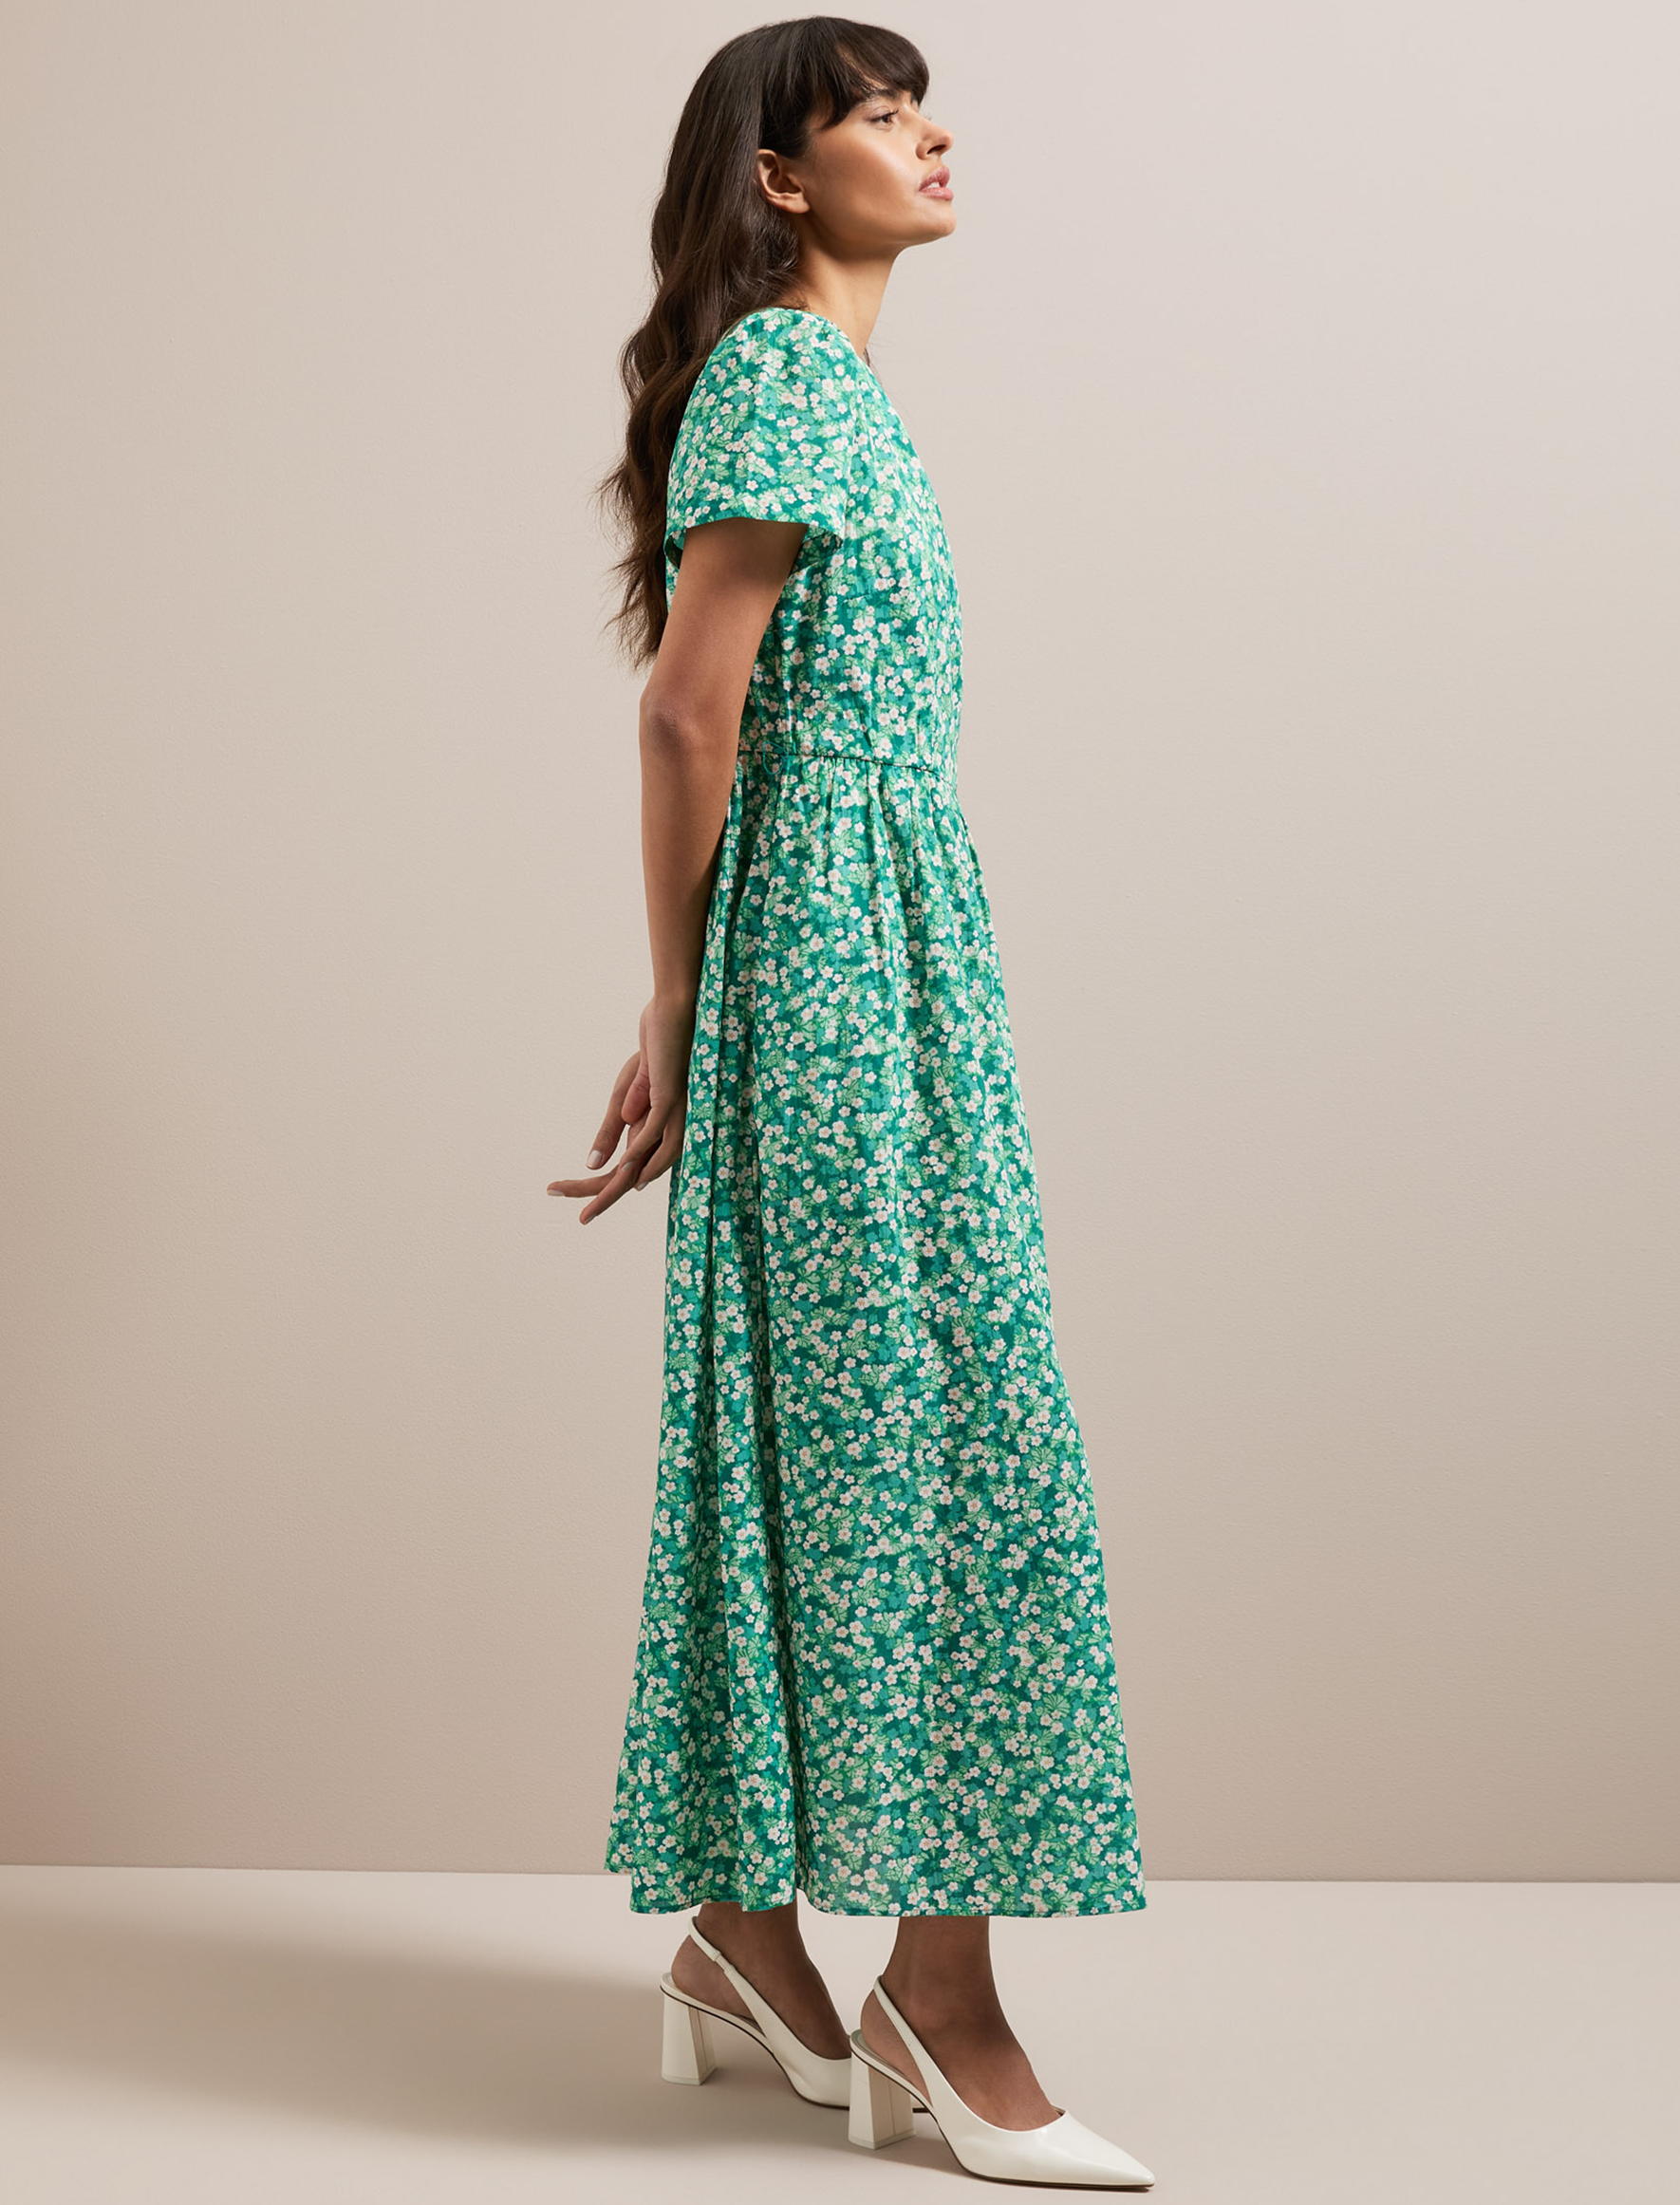 Cefinn Nina Cotton Blend Maxi Dress - Mid Green Blossom Print